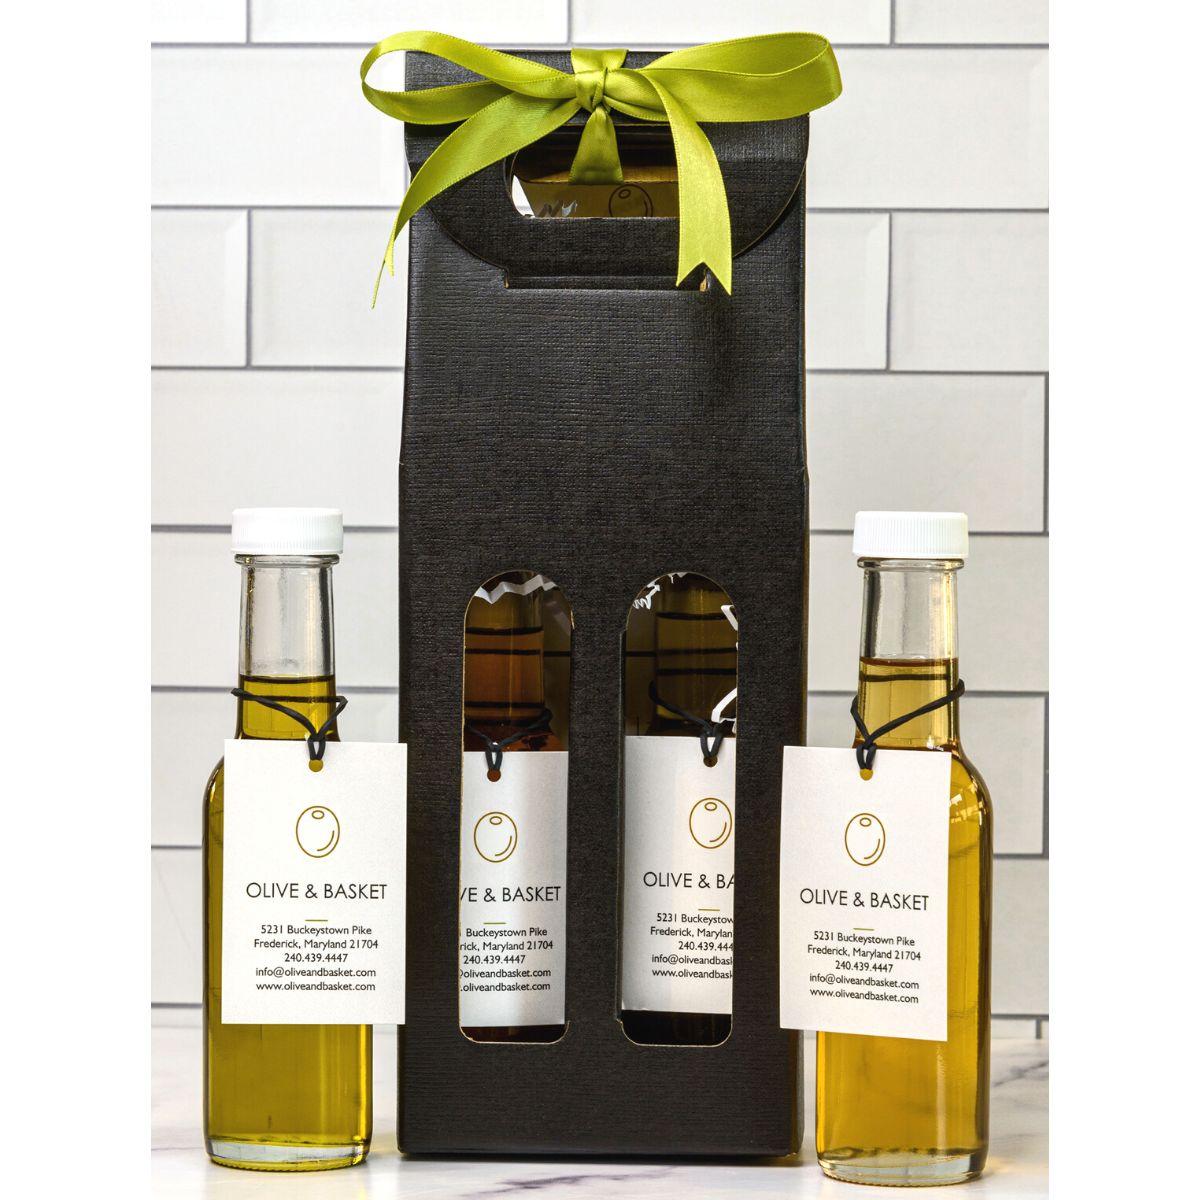 Greek Island-Inspired Duo Gift Set- Includes Lemon Cucumber White Balsamic Vinegar and Greek Seasoning Olive Oil in a Gift Box